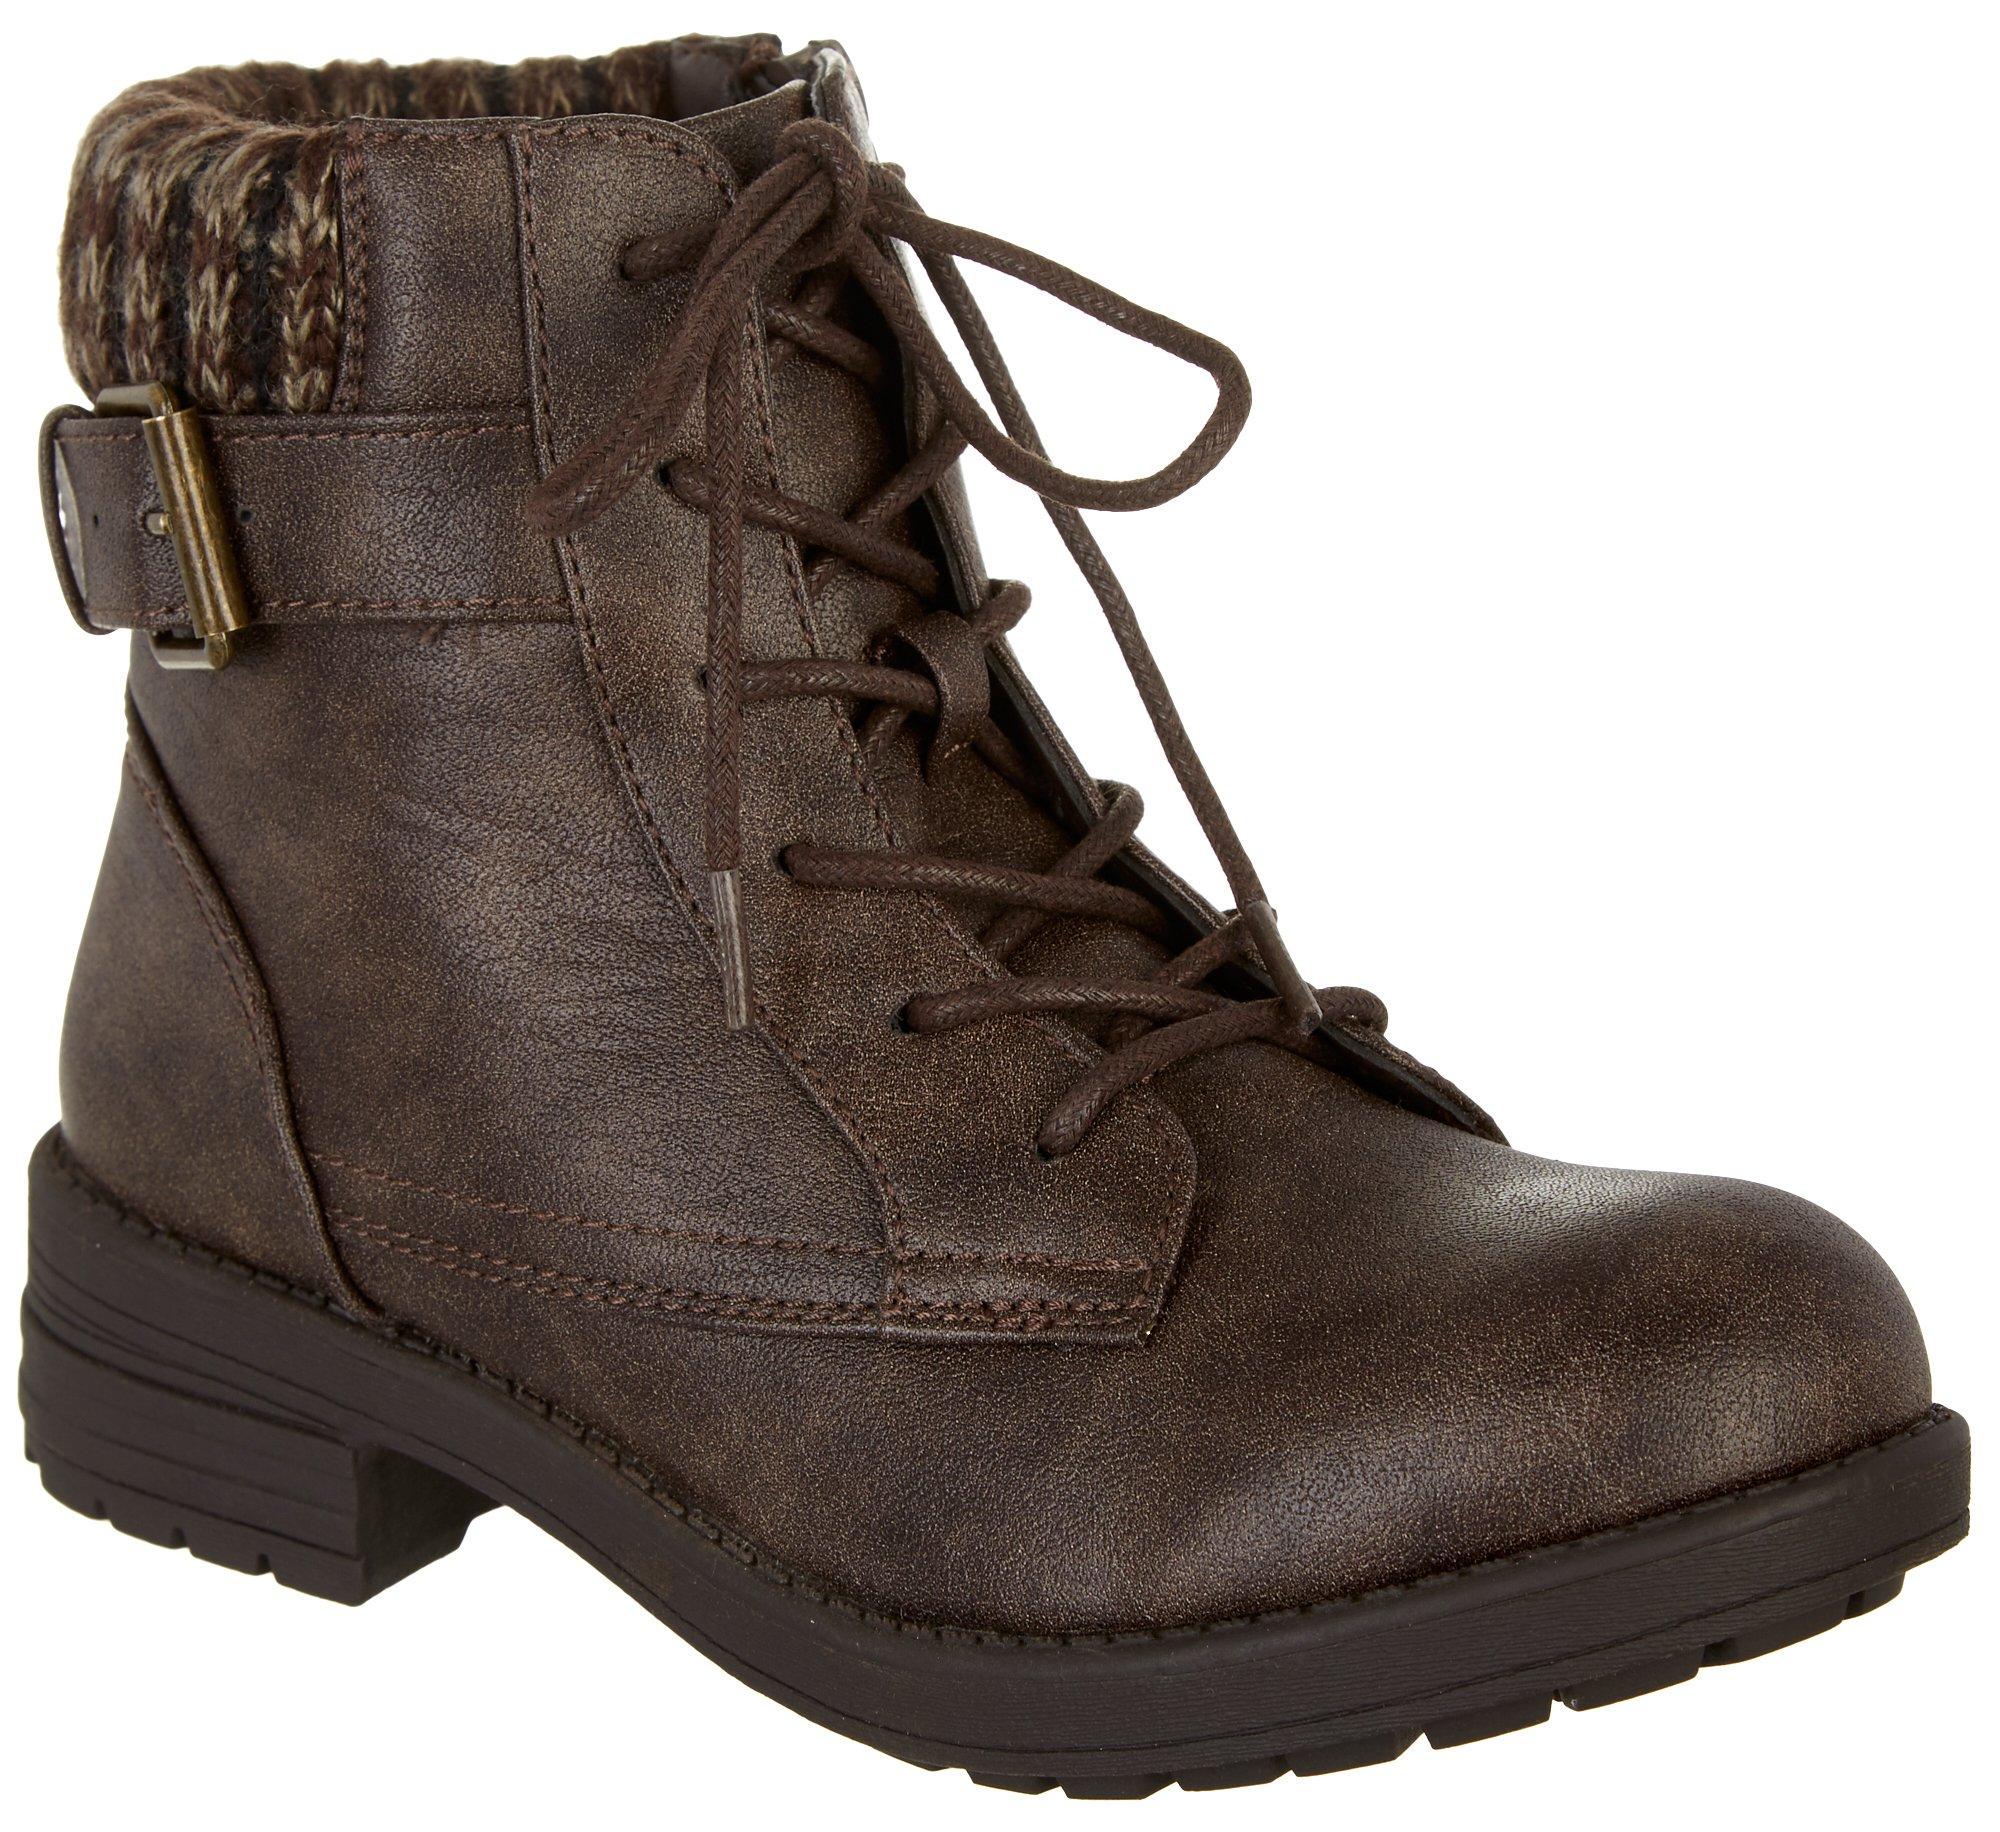 unionbay boots